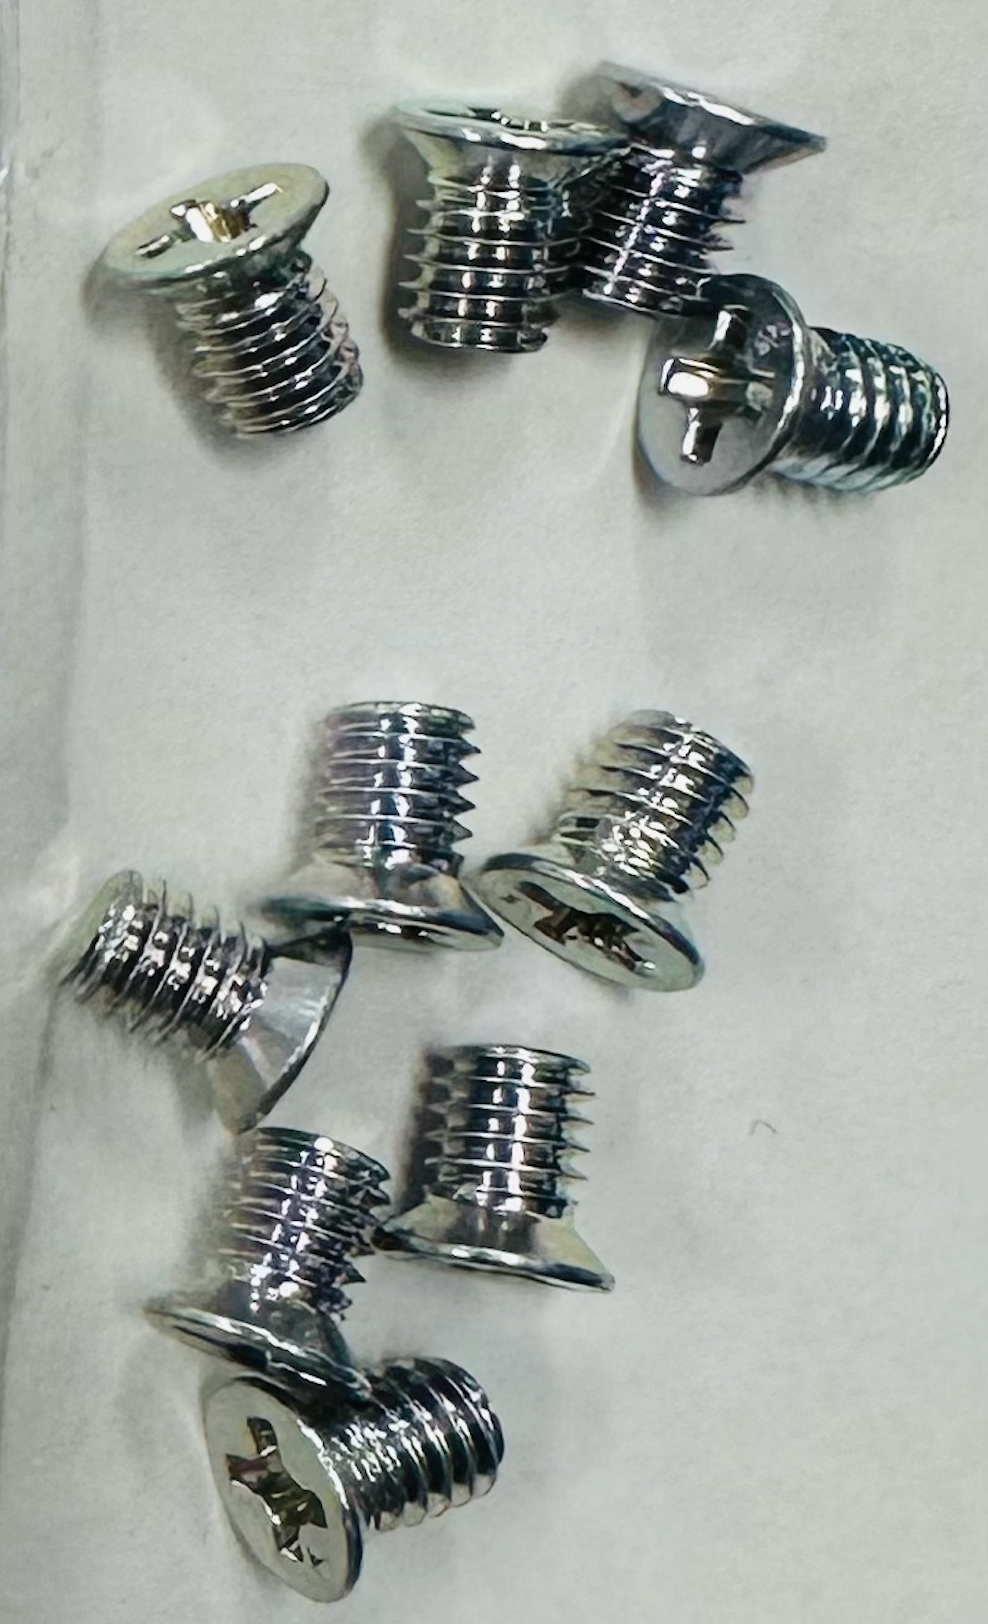 Misumi slide screws - 6mm